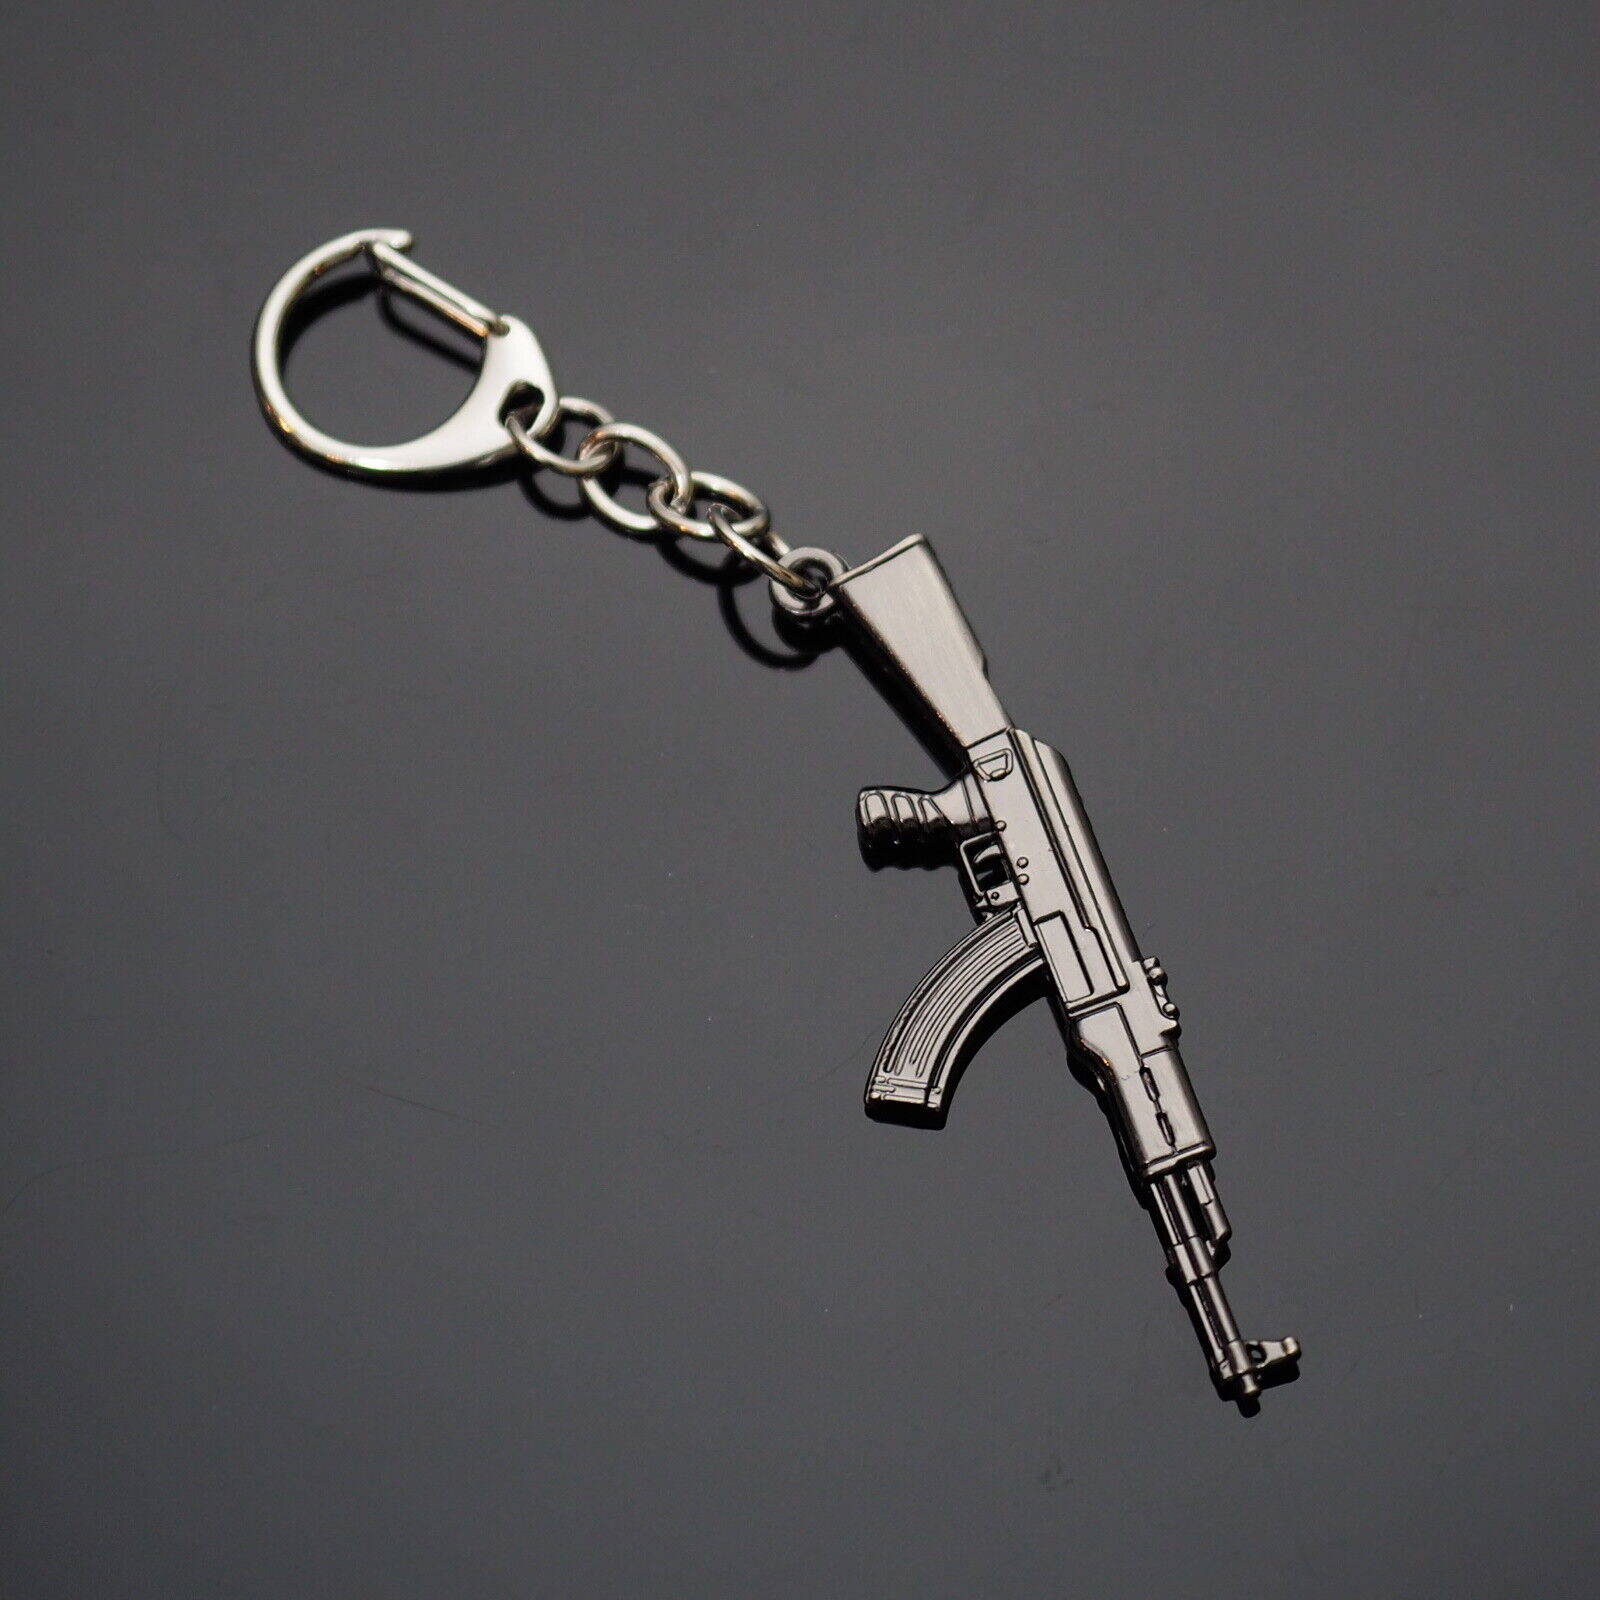 AK47 Keychain Rifle Machine Gun Model Metal Keyring Key Ring Chain Black Gift